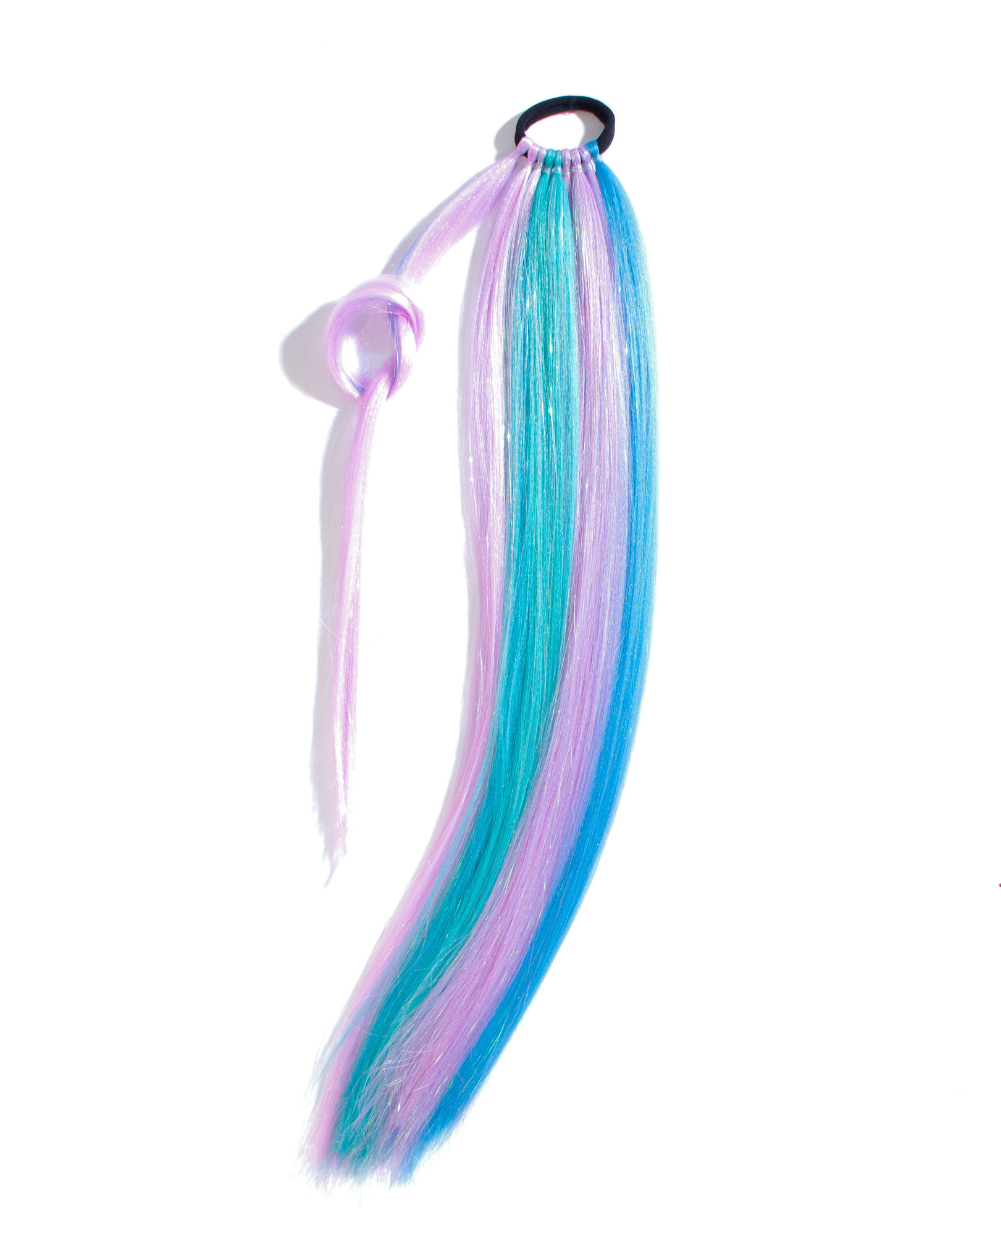 Siren Song - Mermaid Ponytail Hair Extension with Tinsel - Lunautics Ponytail Hair Extension